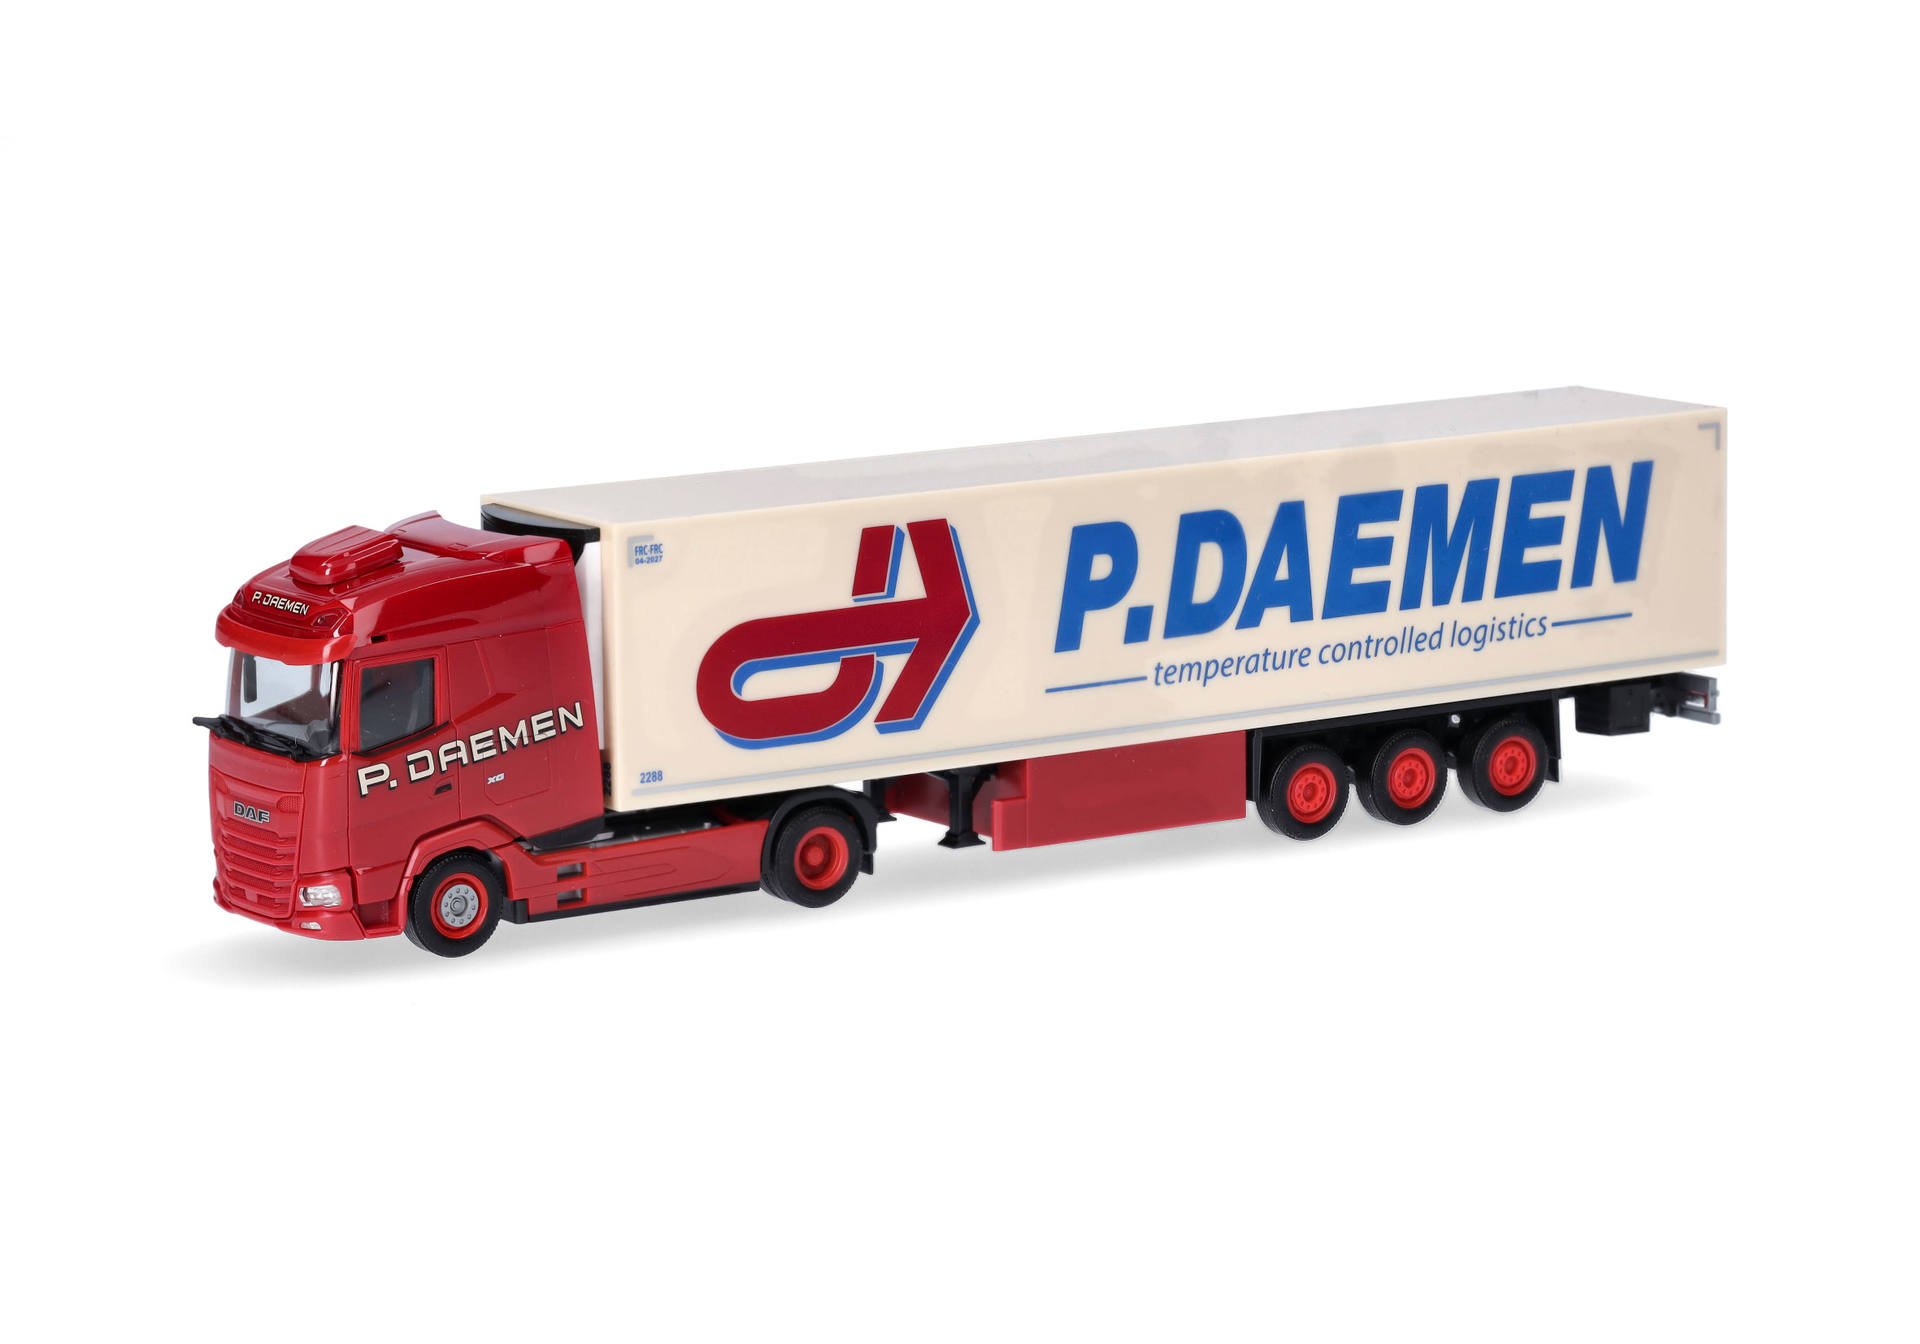 DAF XG refrigerated box semitrailer "P. DAEMEN" (Netherlands/Maasbree)